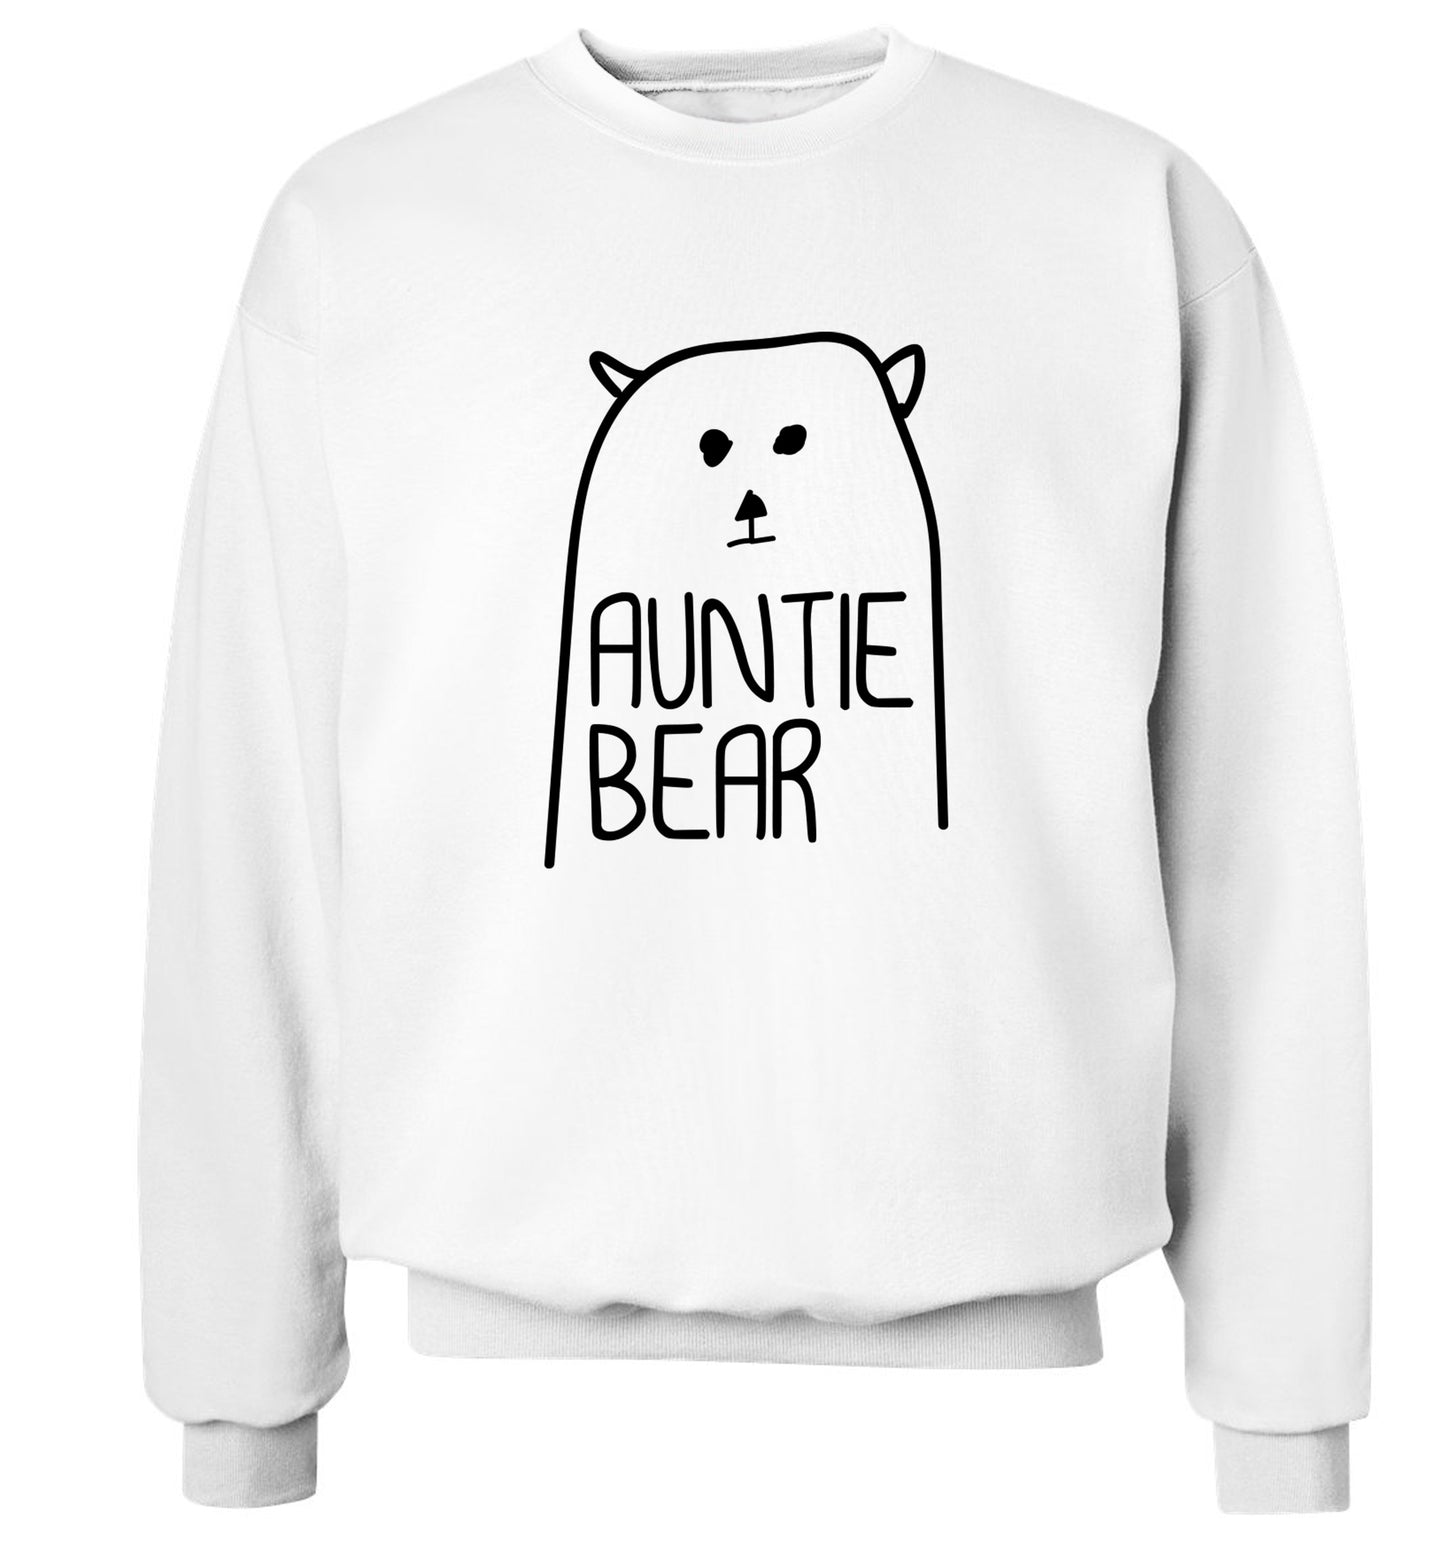 Auntie bear Adult's unisex white Sweater 2XL